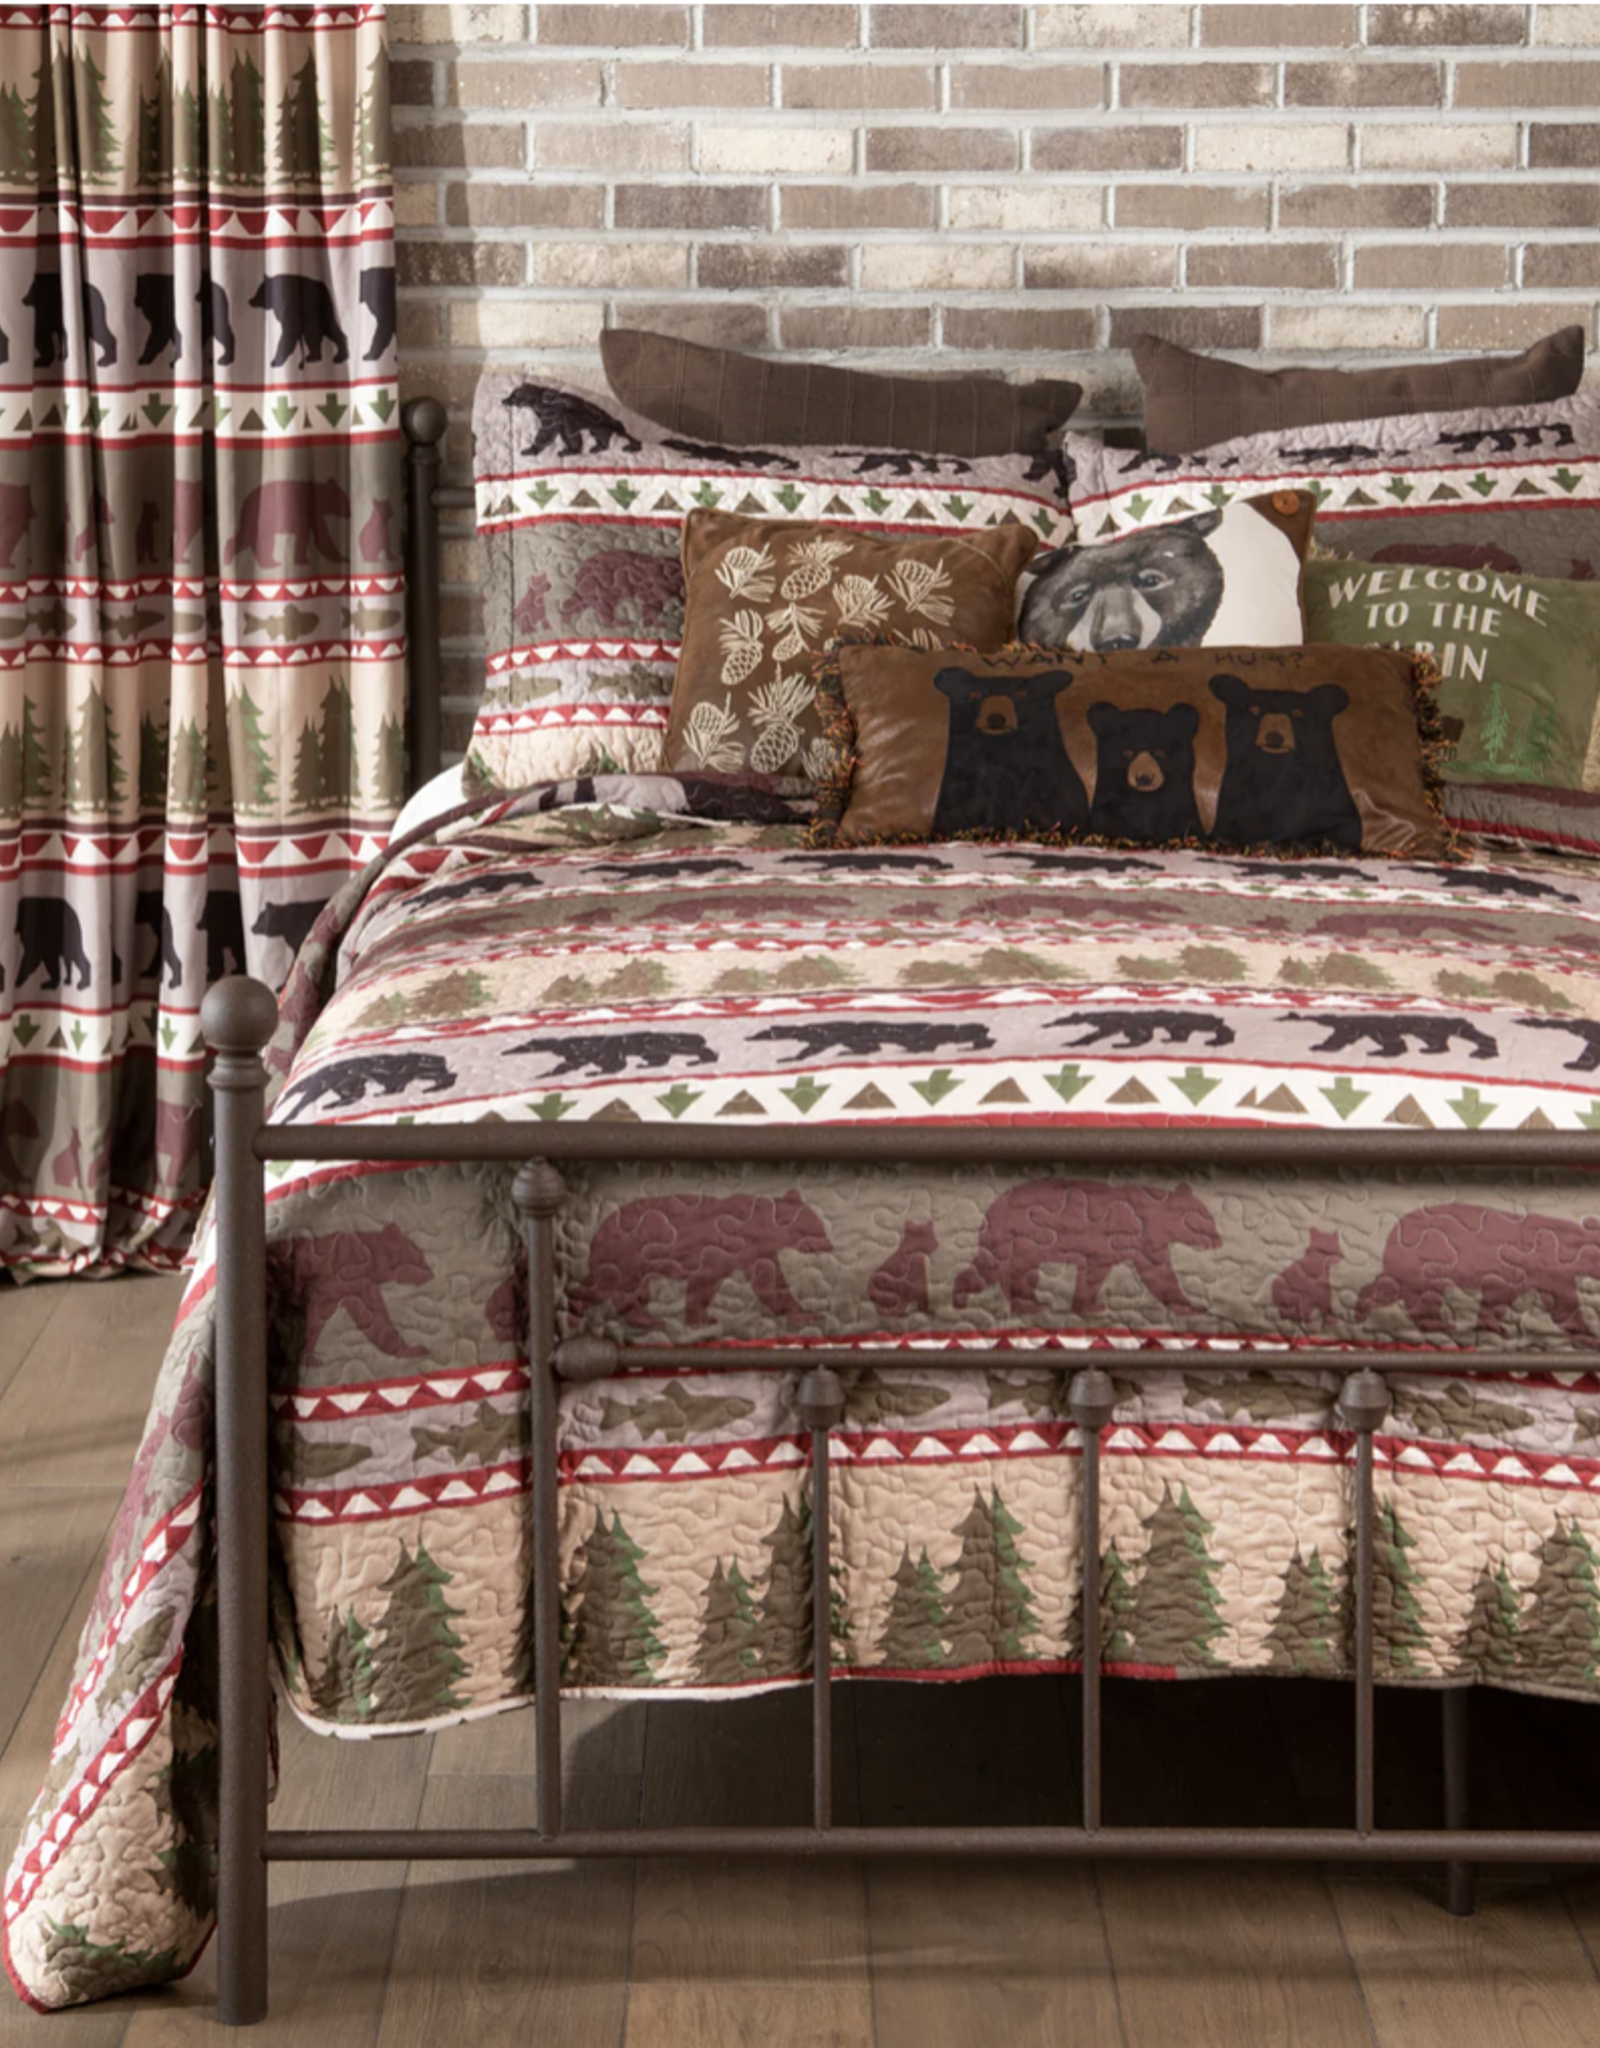 Carstens Bear Stripe Quilt Bed Set - King